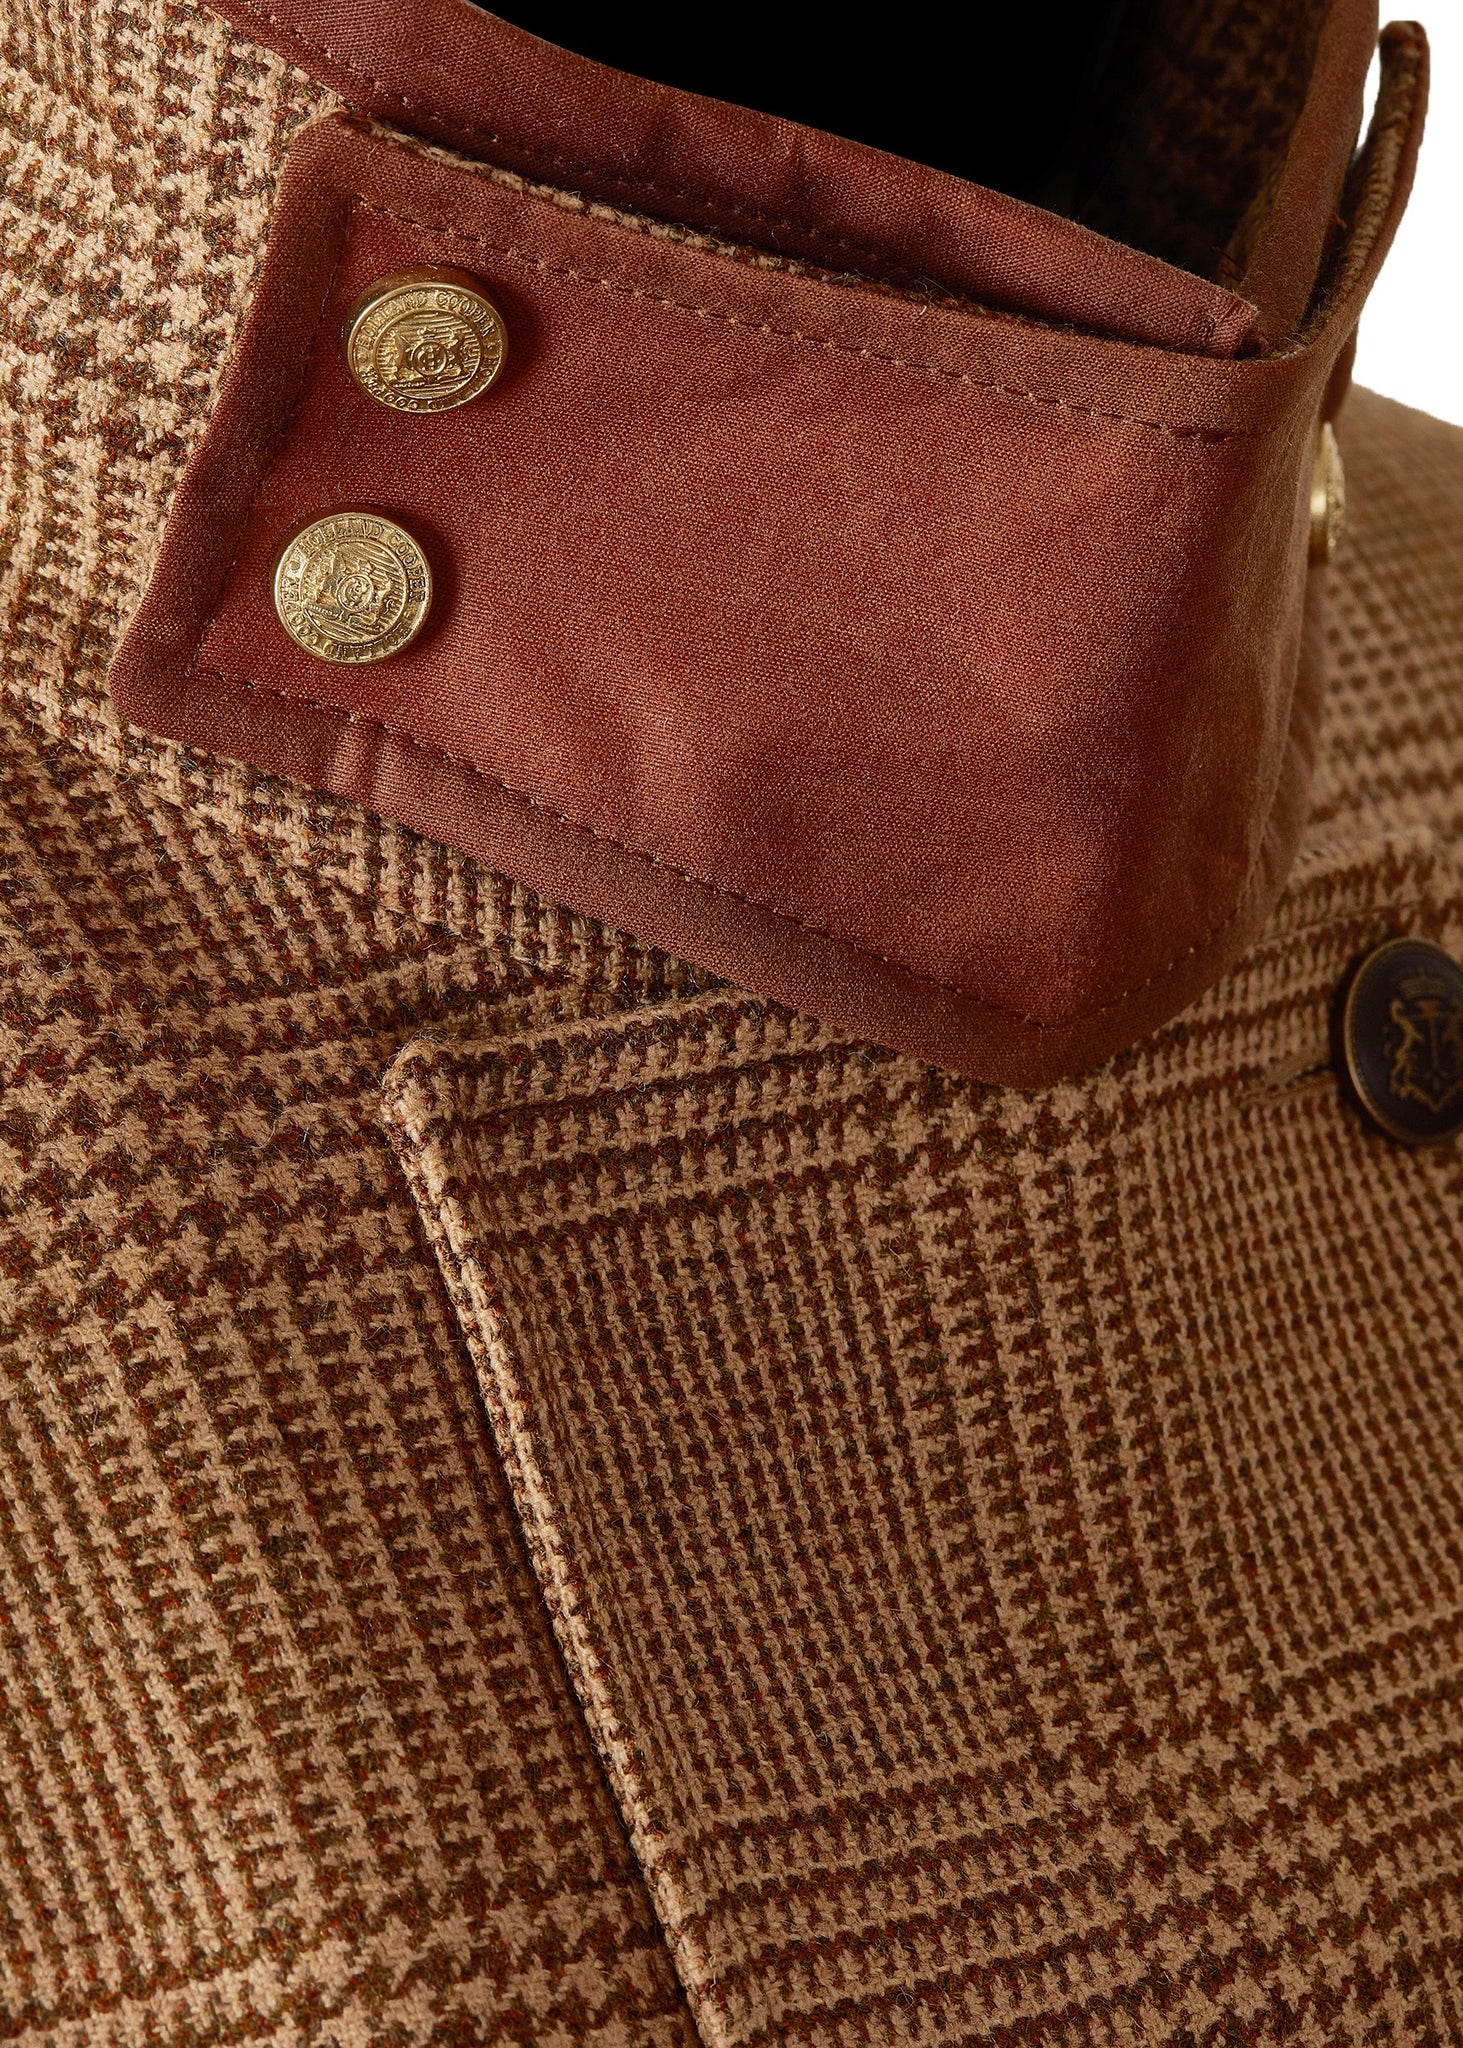 Detail collar of tan brown tartan tweed field coat